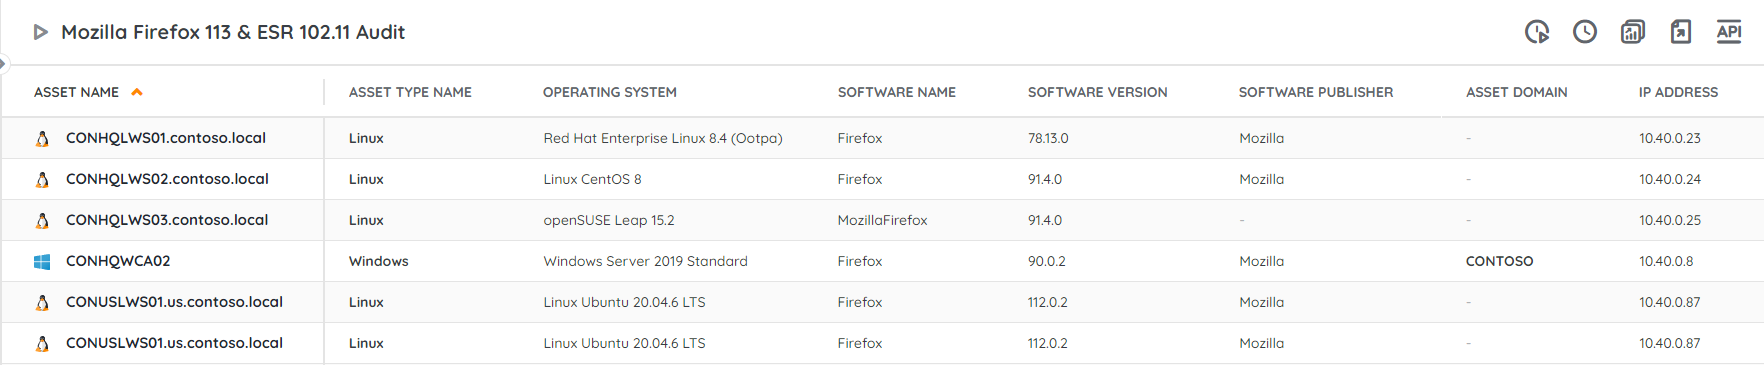 Firefox 113 Audit Report